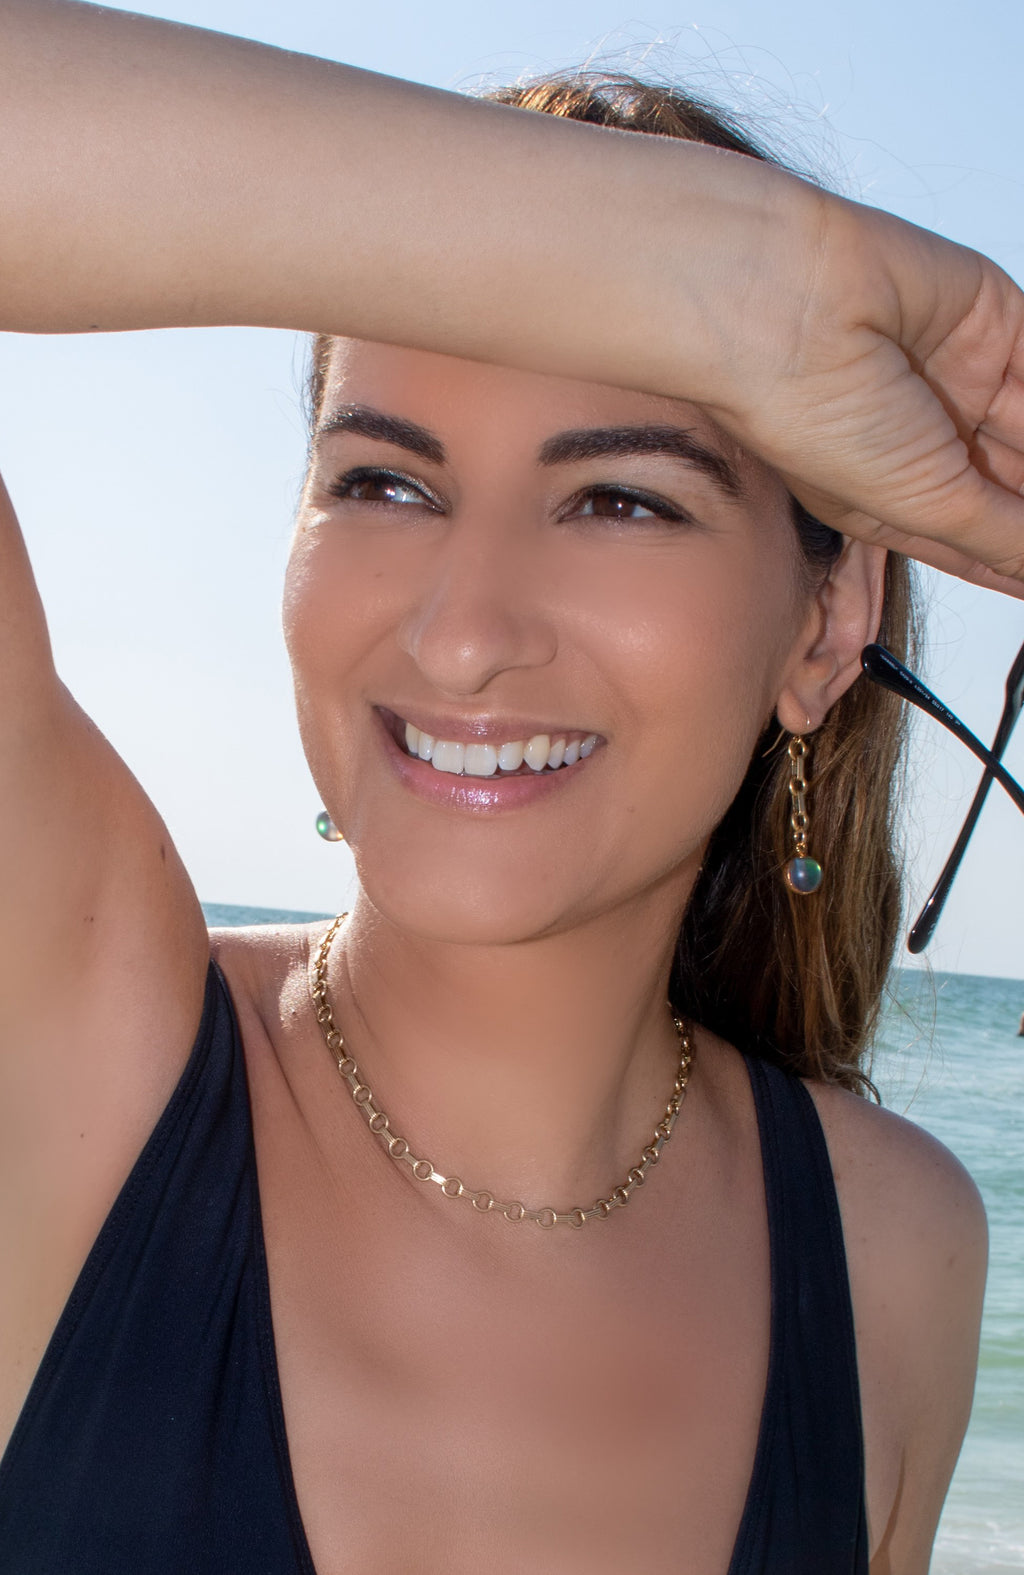 Natasa Plecas wearing PLECAS Luna Necklace and Voda Earrings in the ocean.